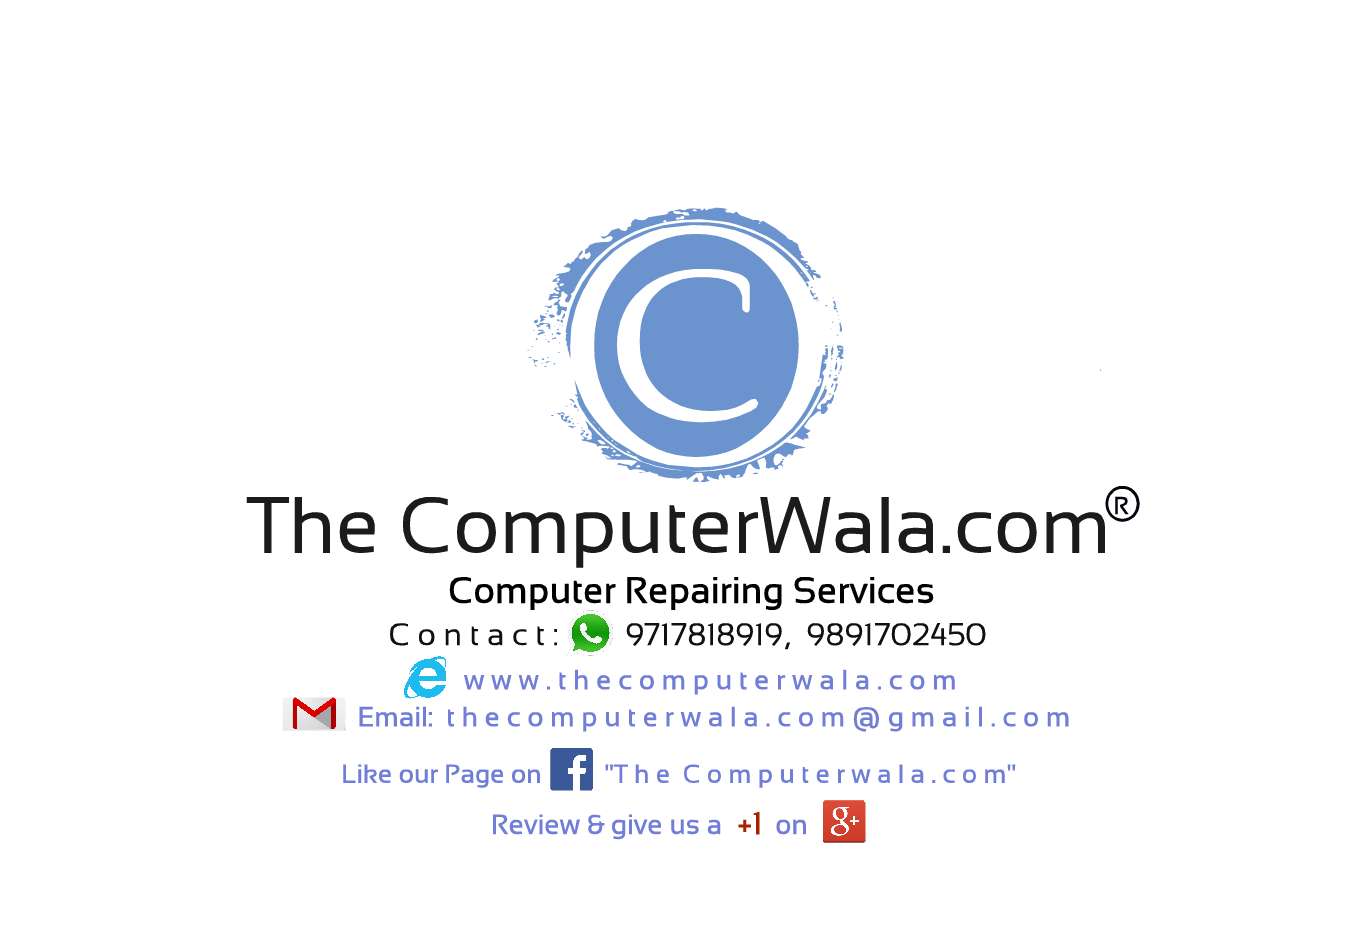 The Computerwala.com